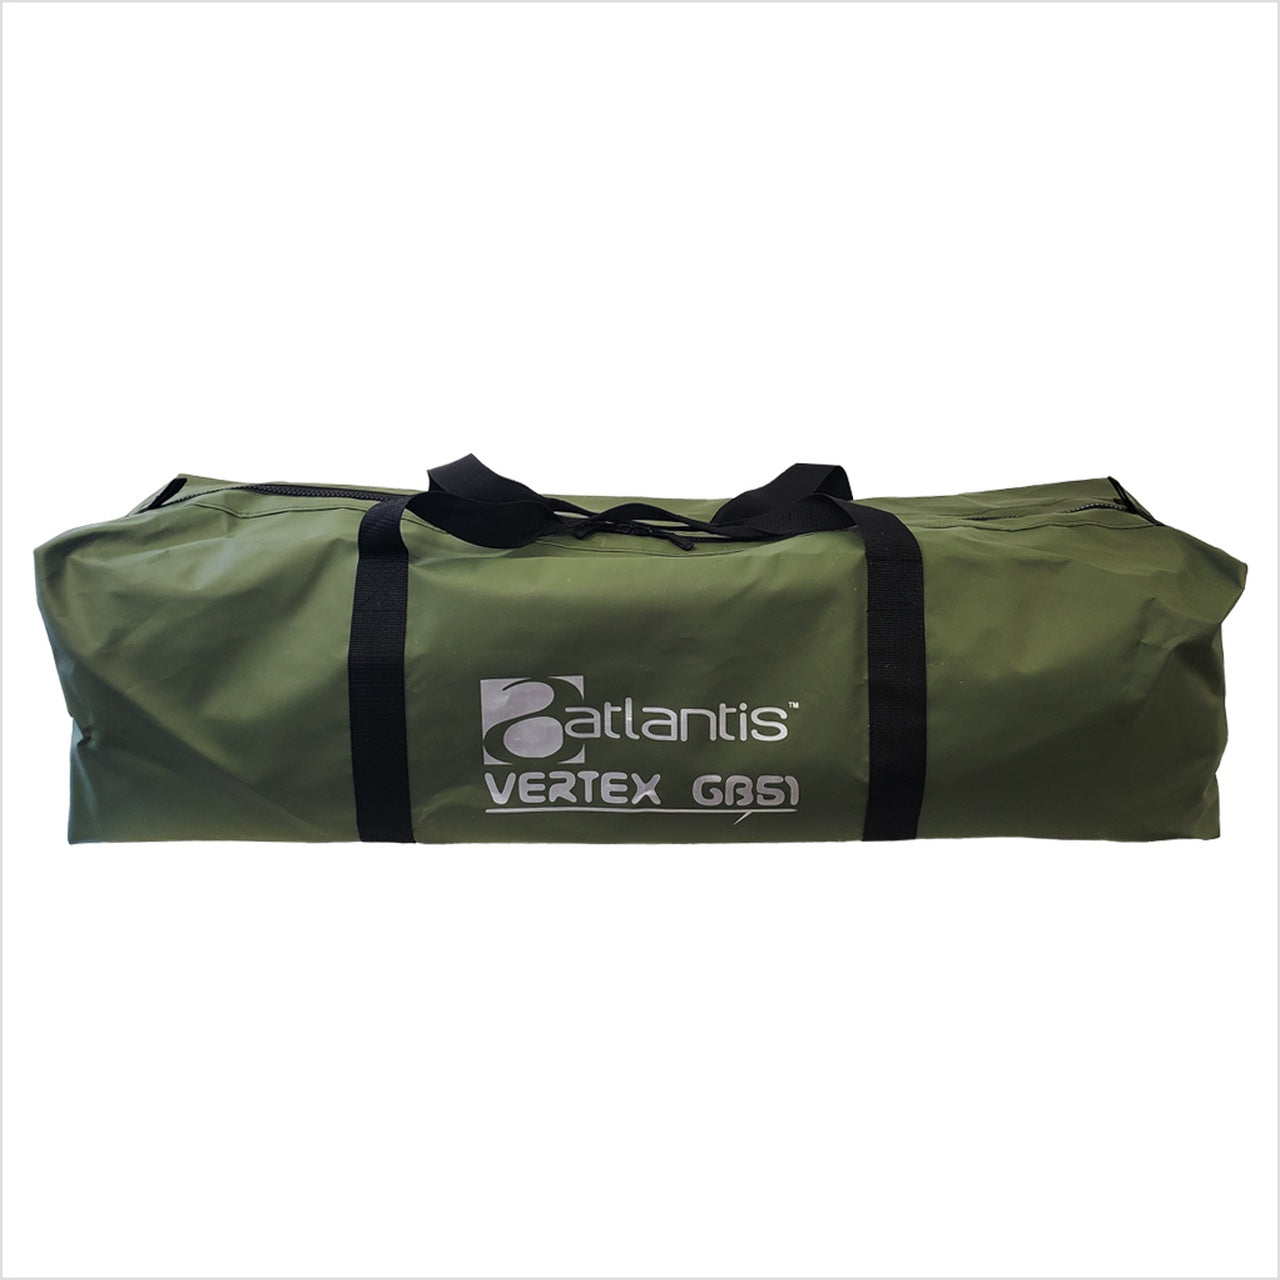 Atlantis Vertex GB51 Bag